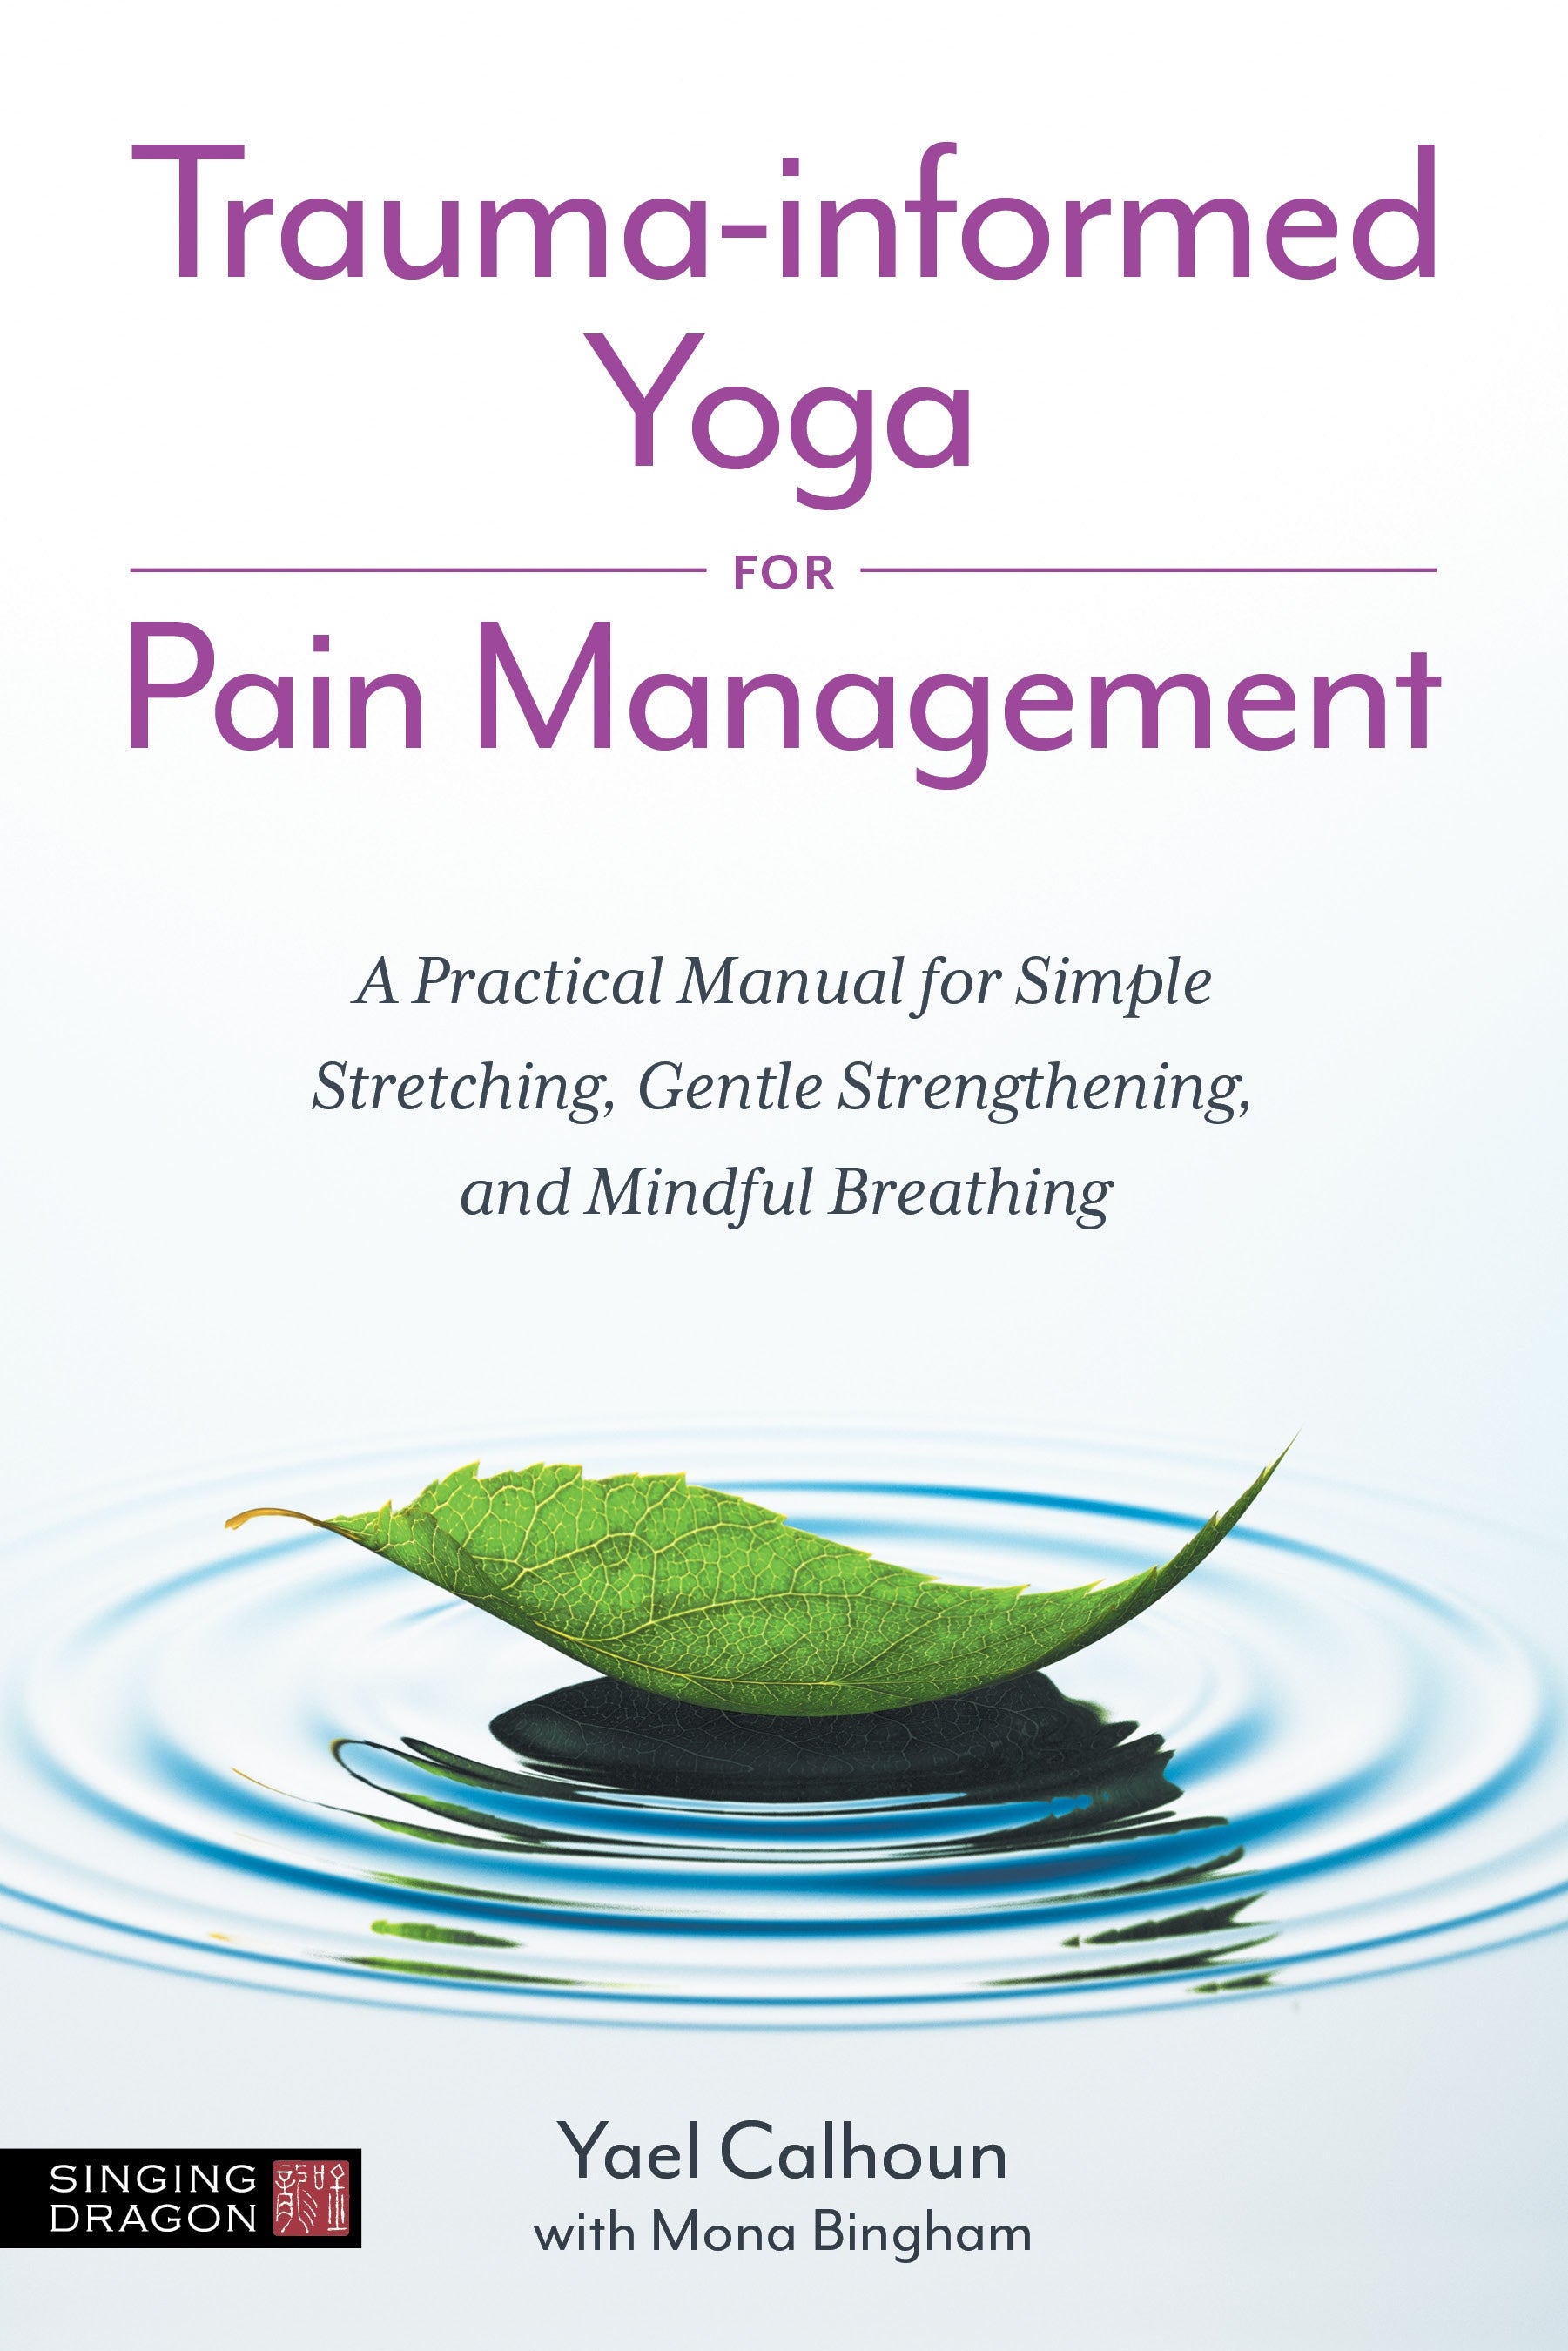 Trauma-informed Yoga for Pain Management by Yael Calhoun